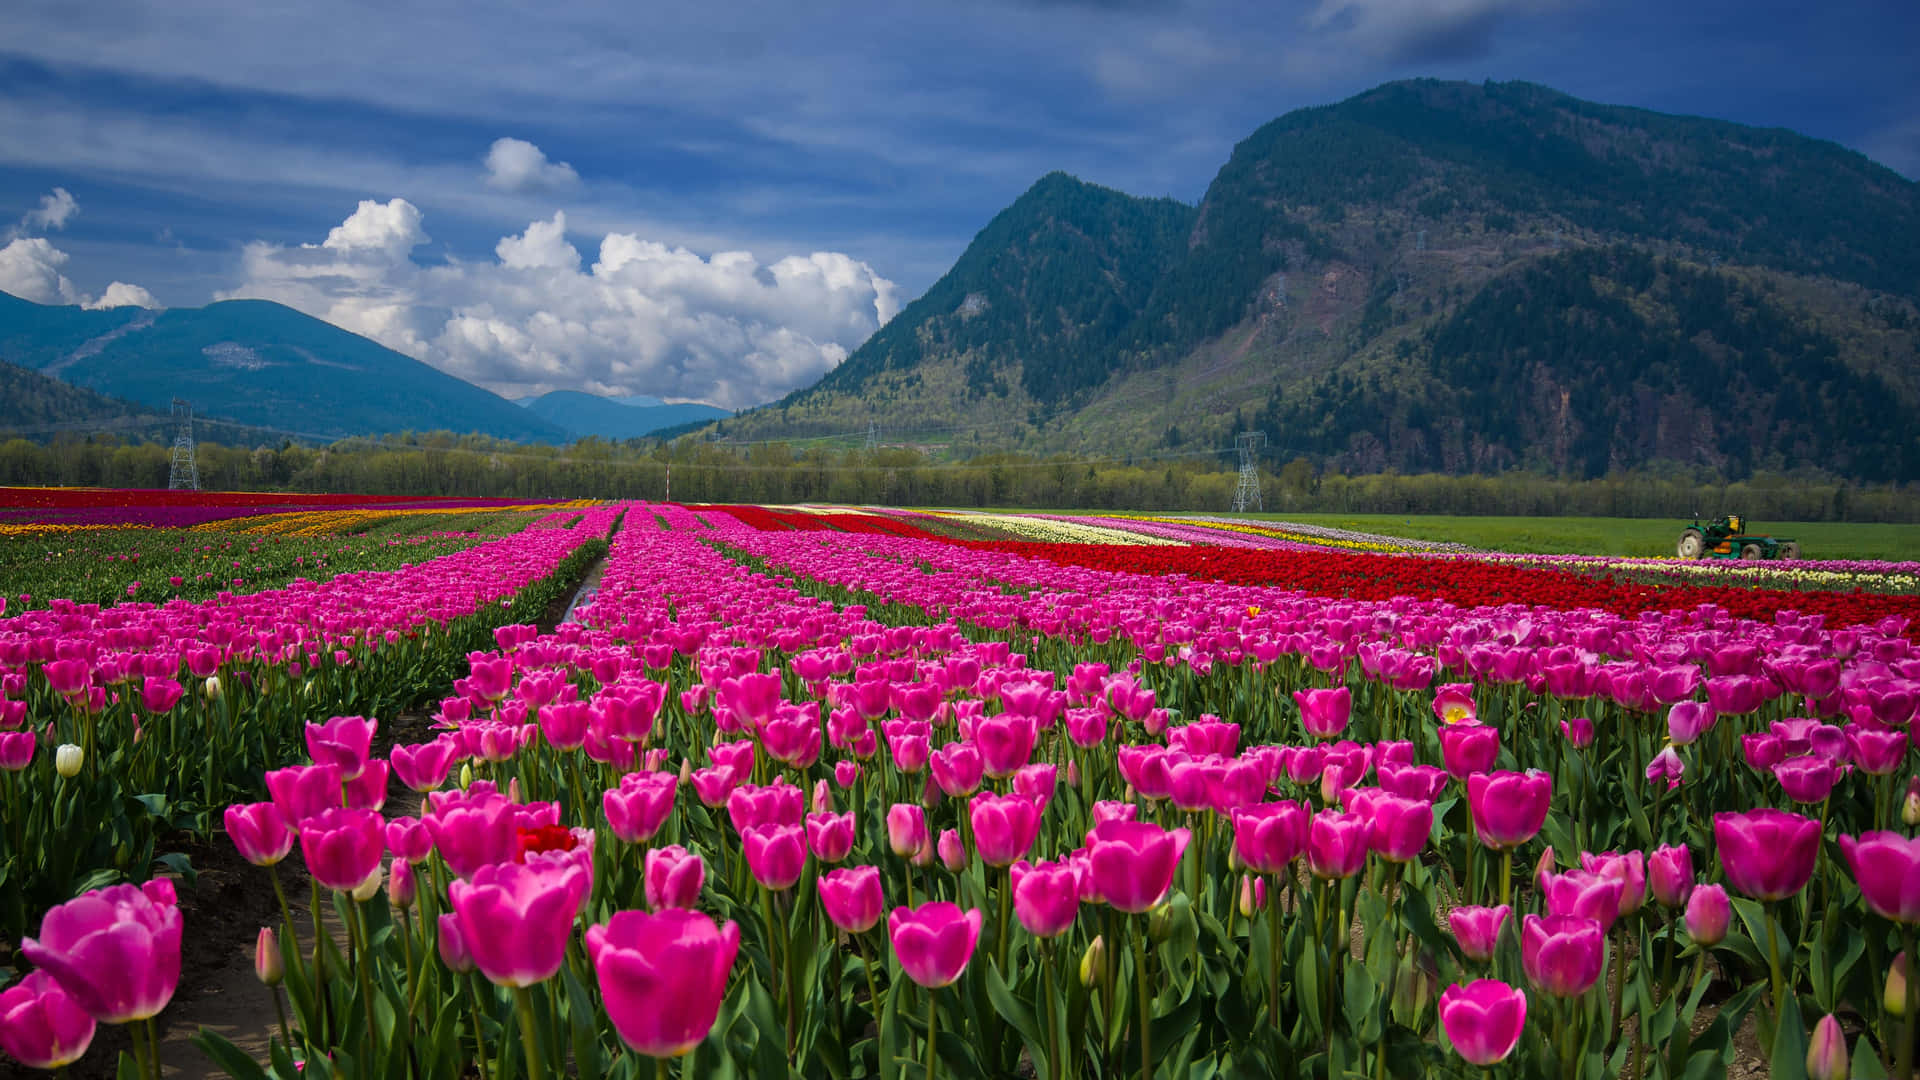 Impresionantecampo De Tulipanes En Plena Floración Fondo de pantalla